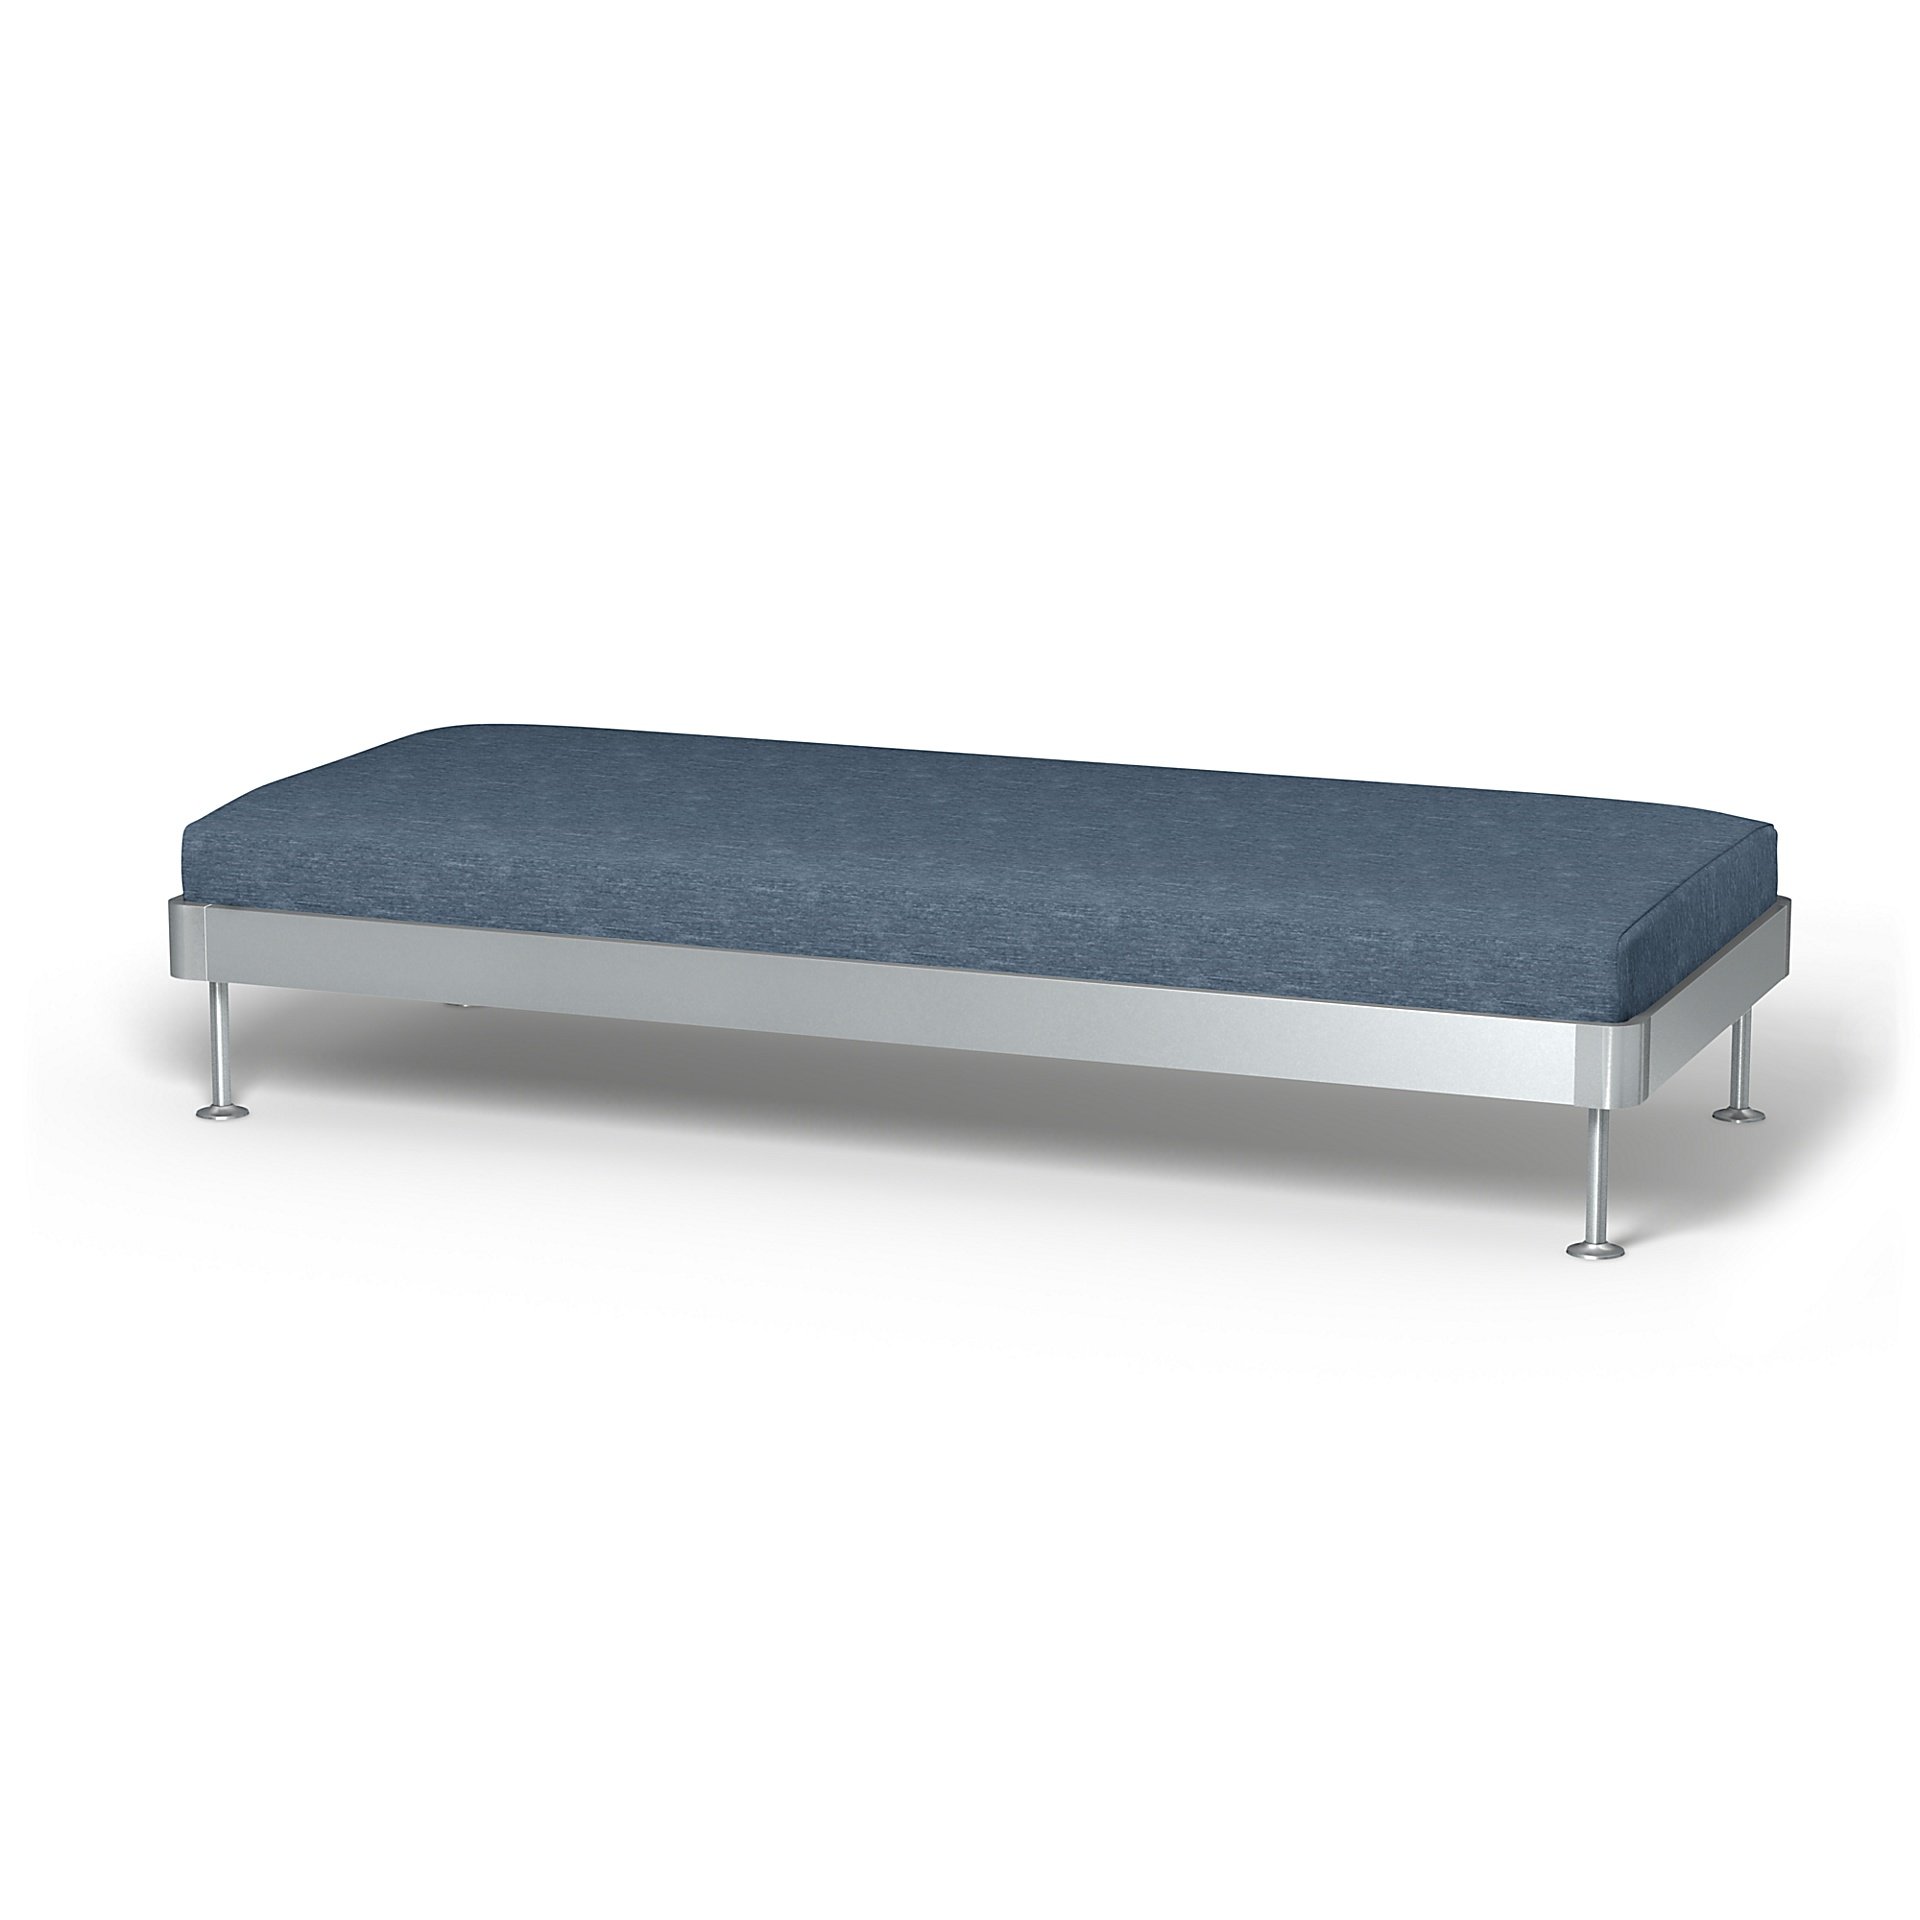 IKEA - Delaktig 3 Seat Platform Cover, Mineral Blue, Velvet - Bemz